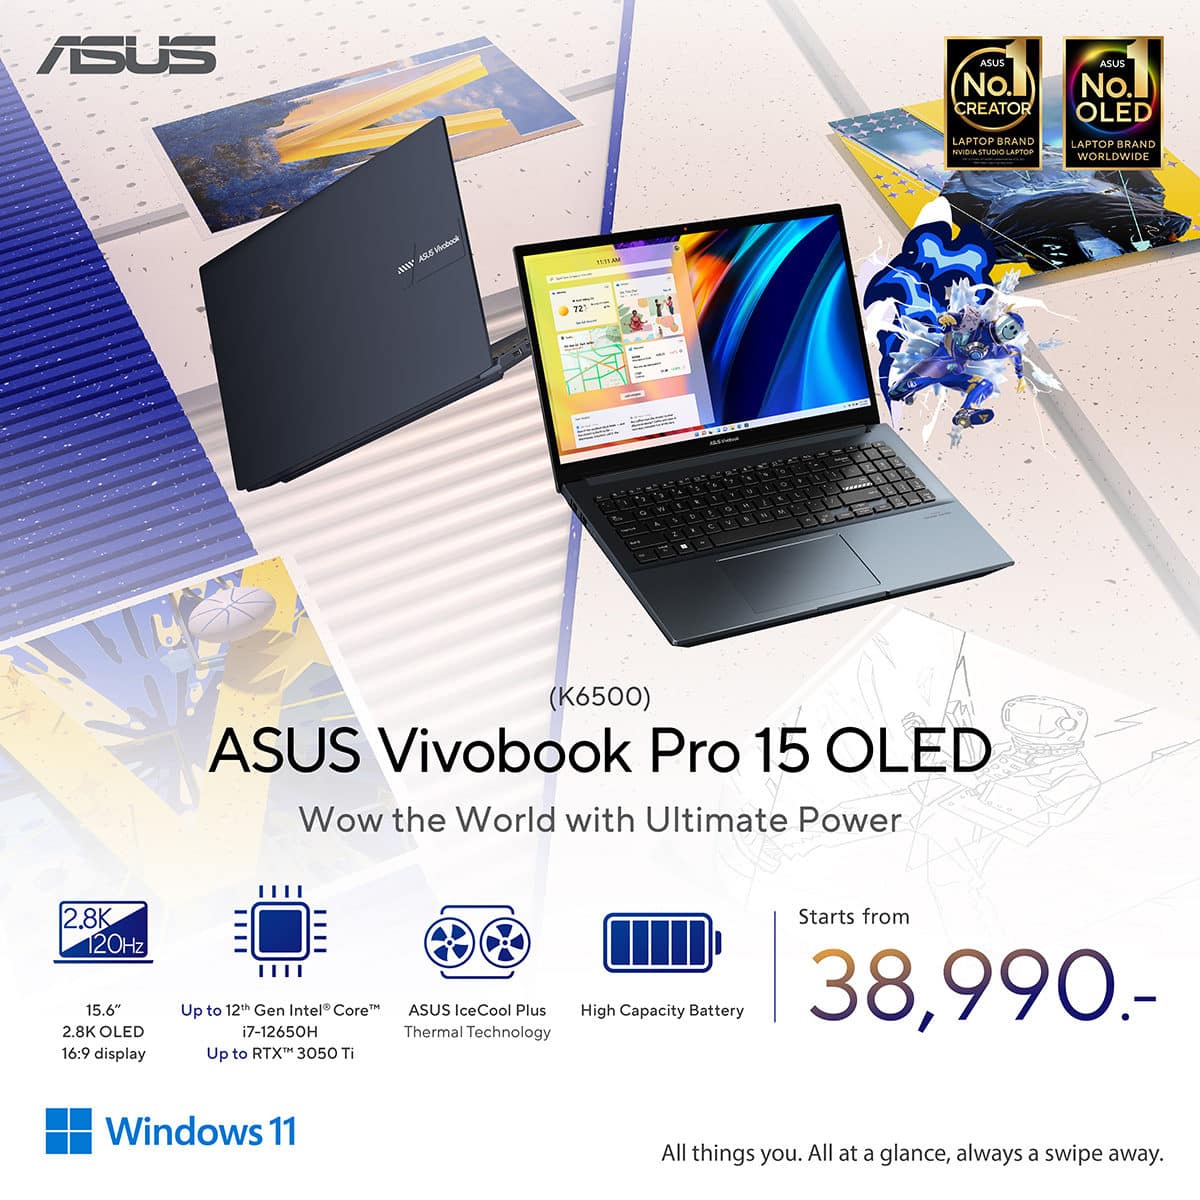 ASUS Vivobook Pro 15 OLED (K6500)